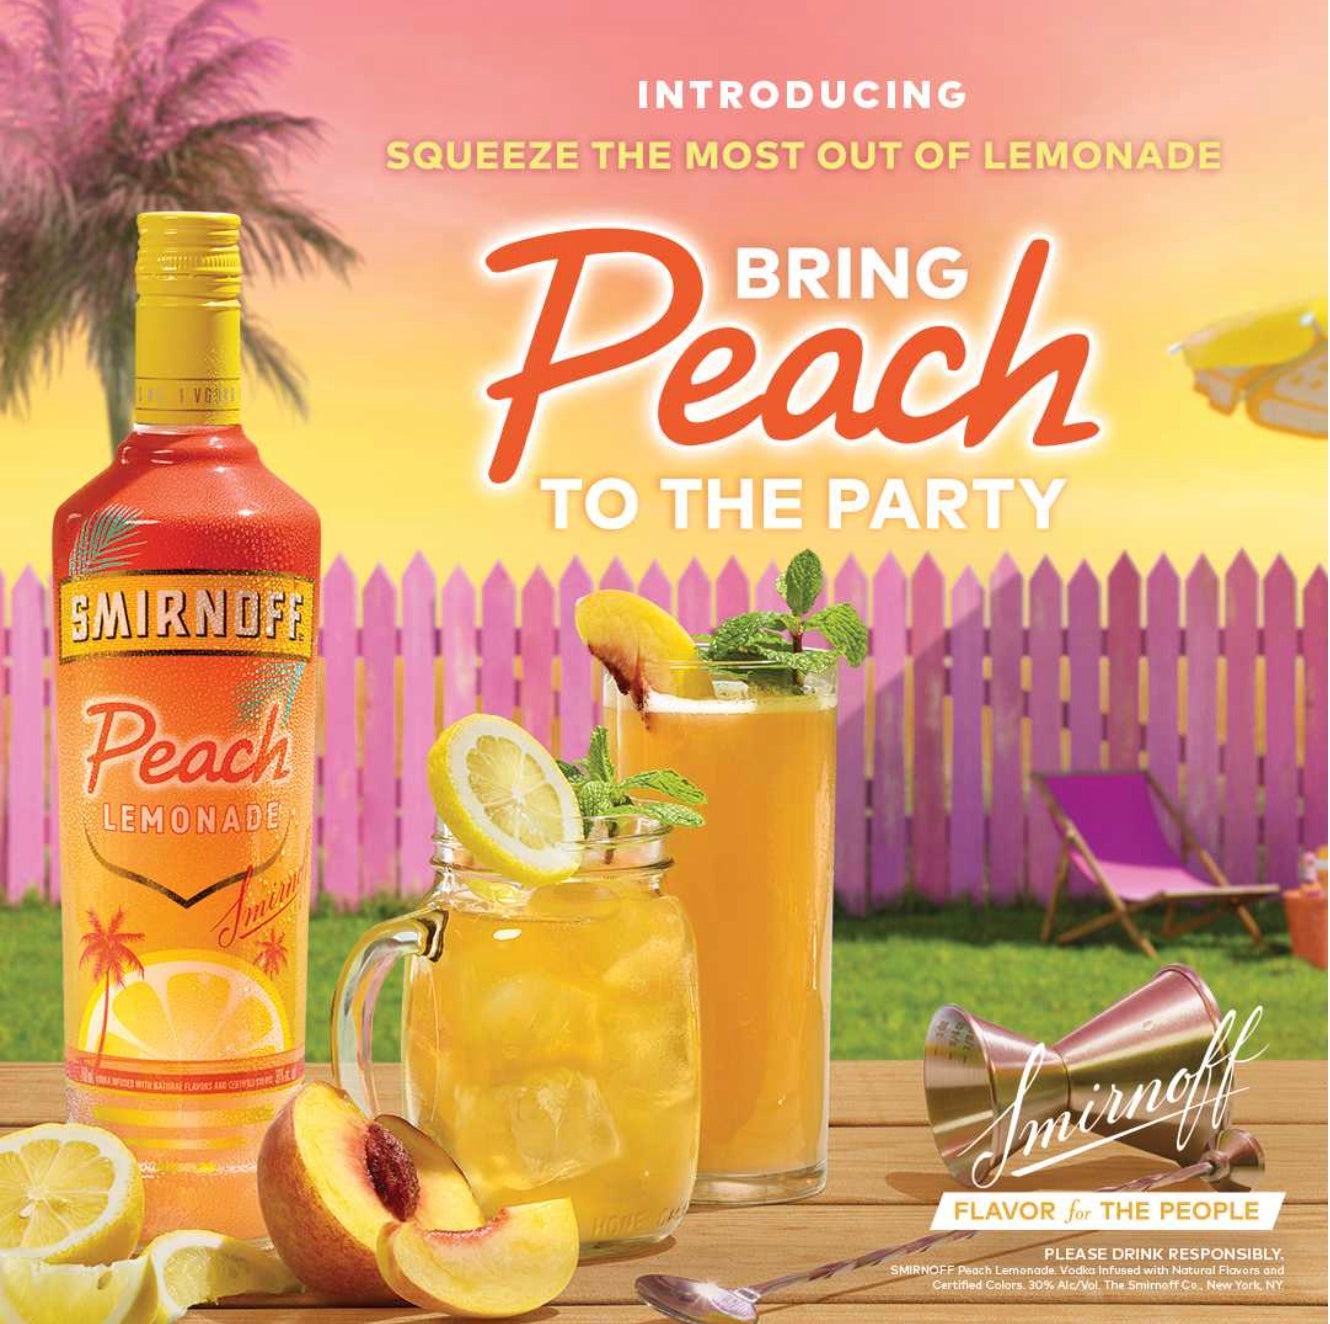 Smirnoff Peach Lemonade Limited Edition Vodka